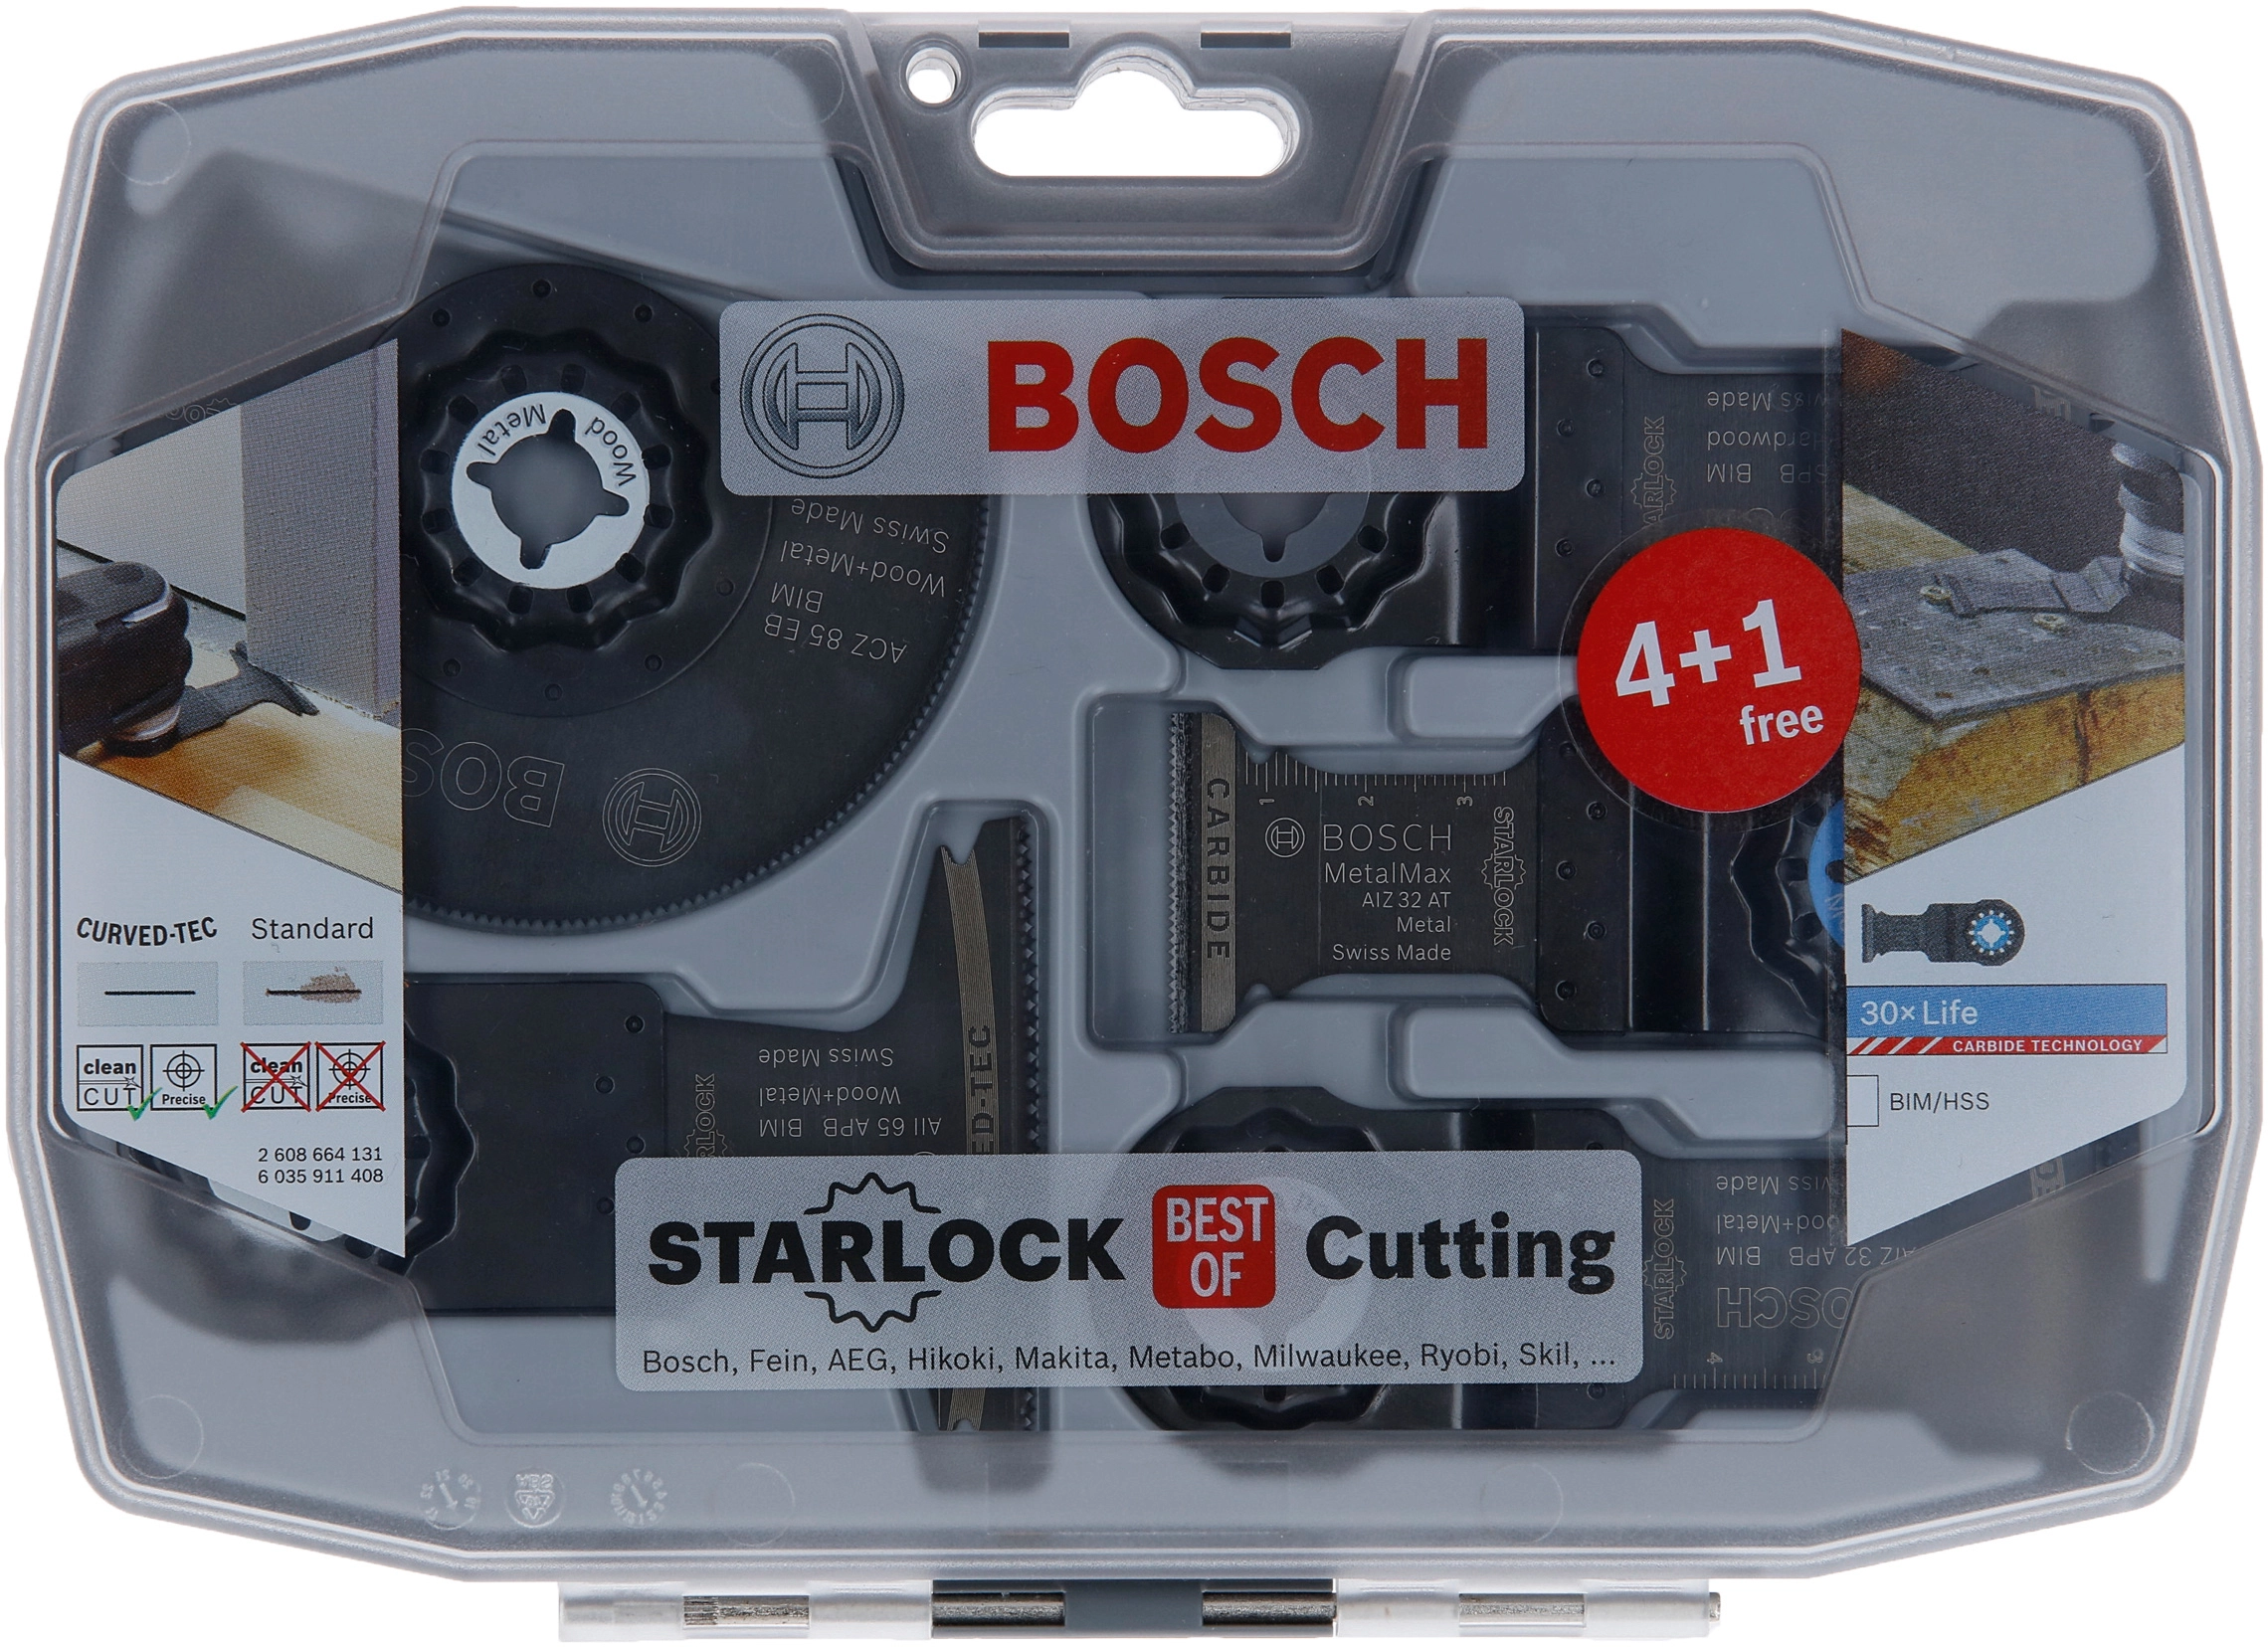 Bosch Starlock Set Best of Cutting 5 pcs.